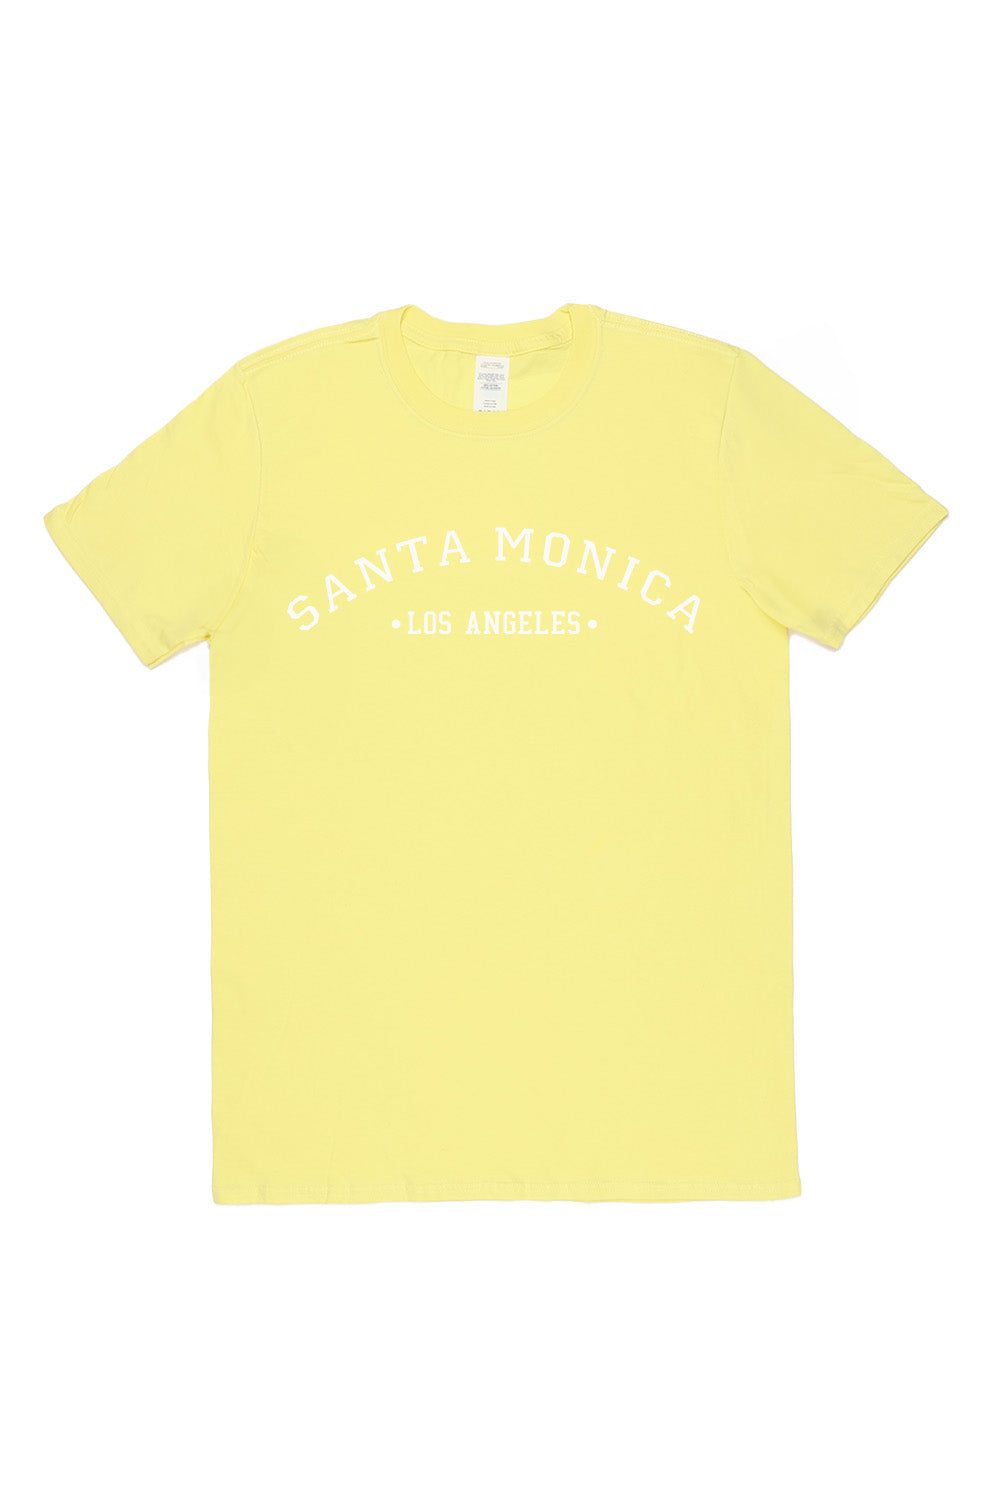 Santa Monica T-Shirt in Yellow (Custom Packs)